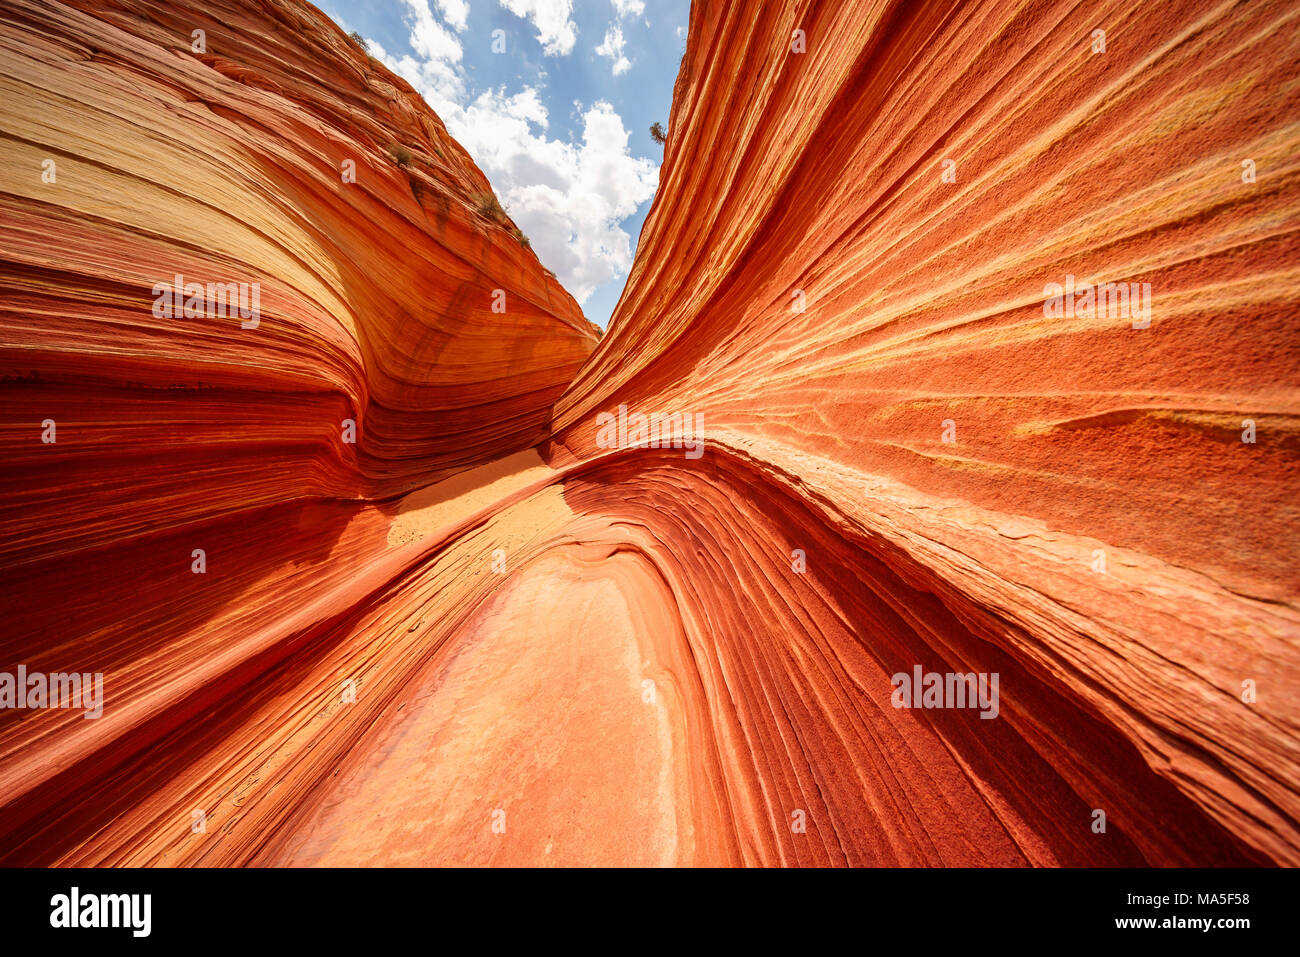 The Wave, Coyote Buttes North, Paria Canyon-Vermillion Cliffs Wilderness, Colorado Plateau, Arizona, USA Stock Photo